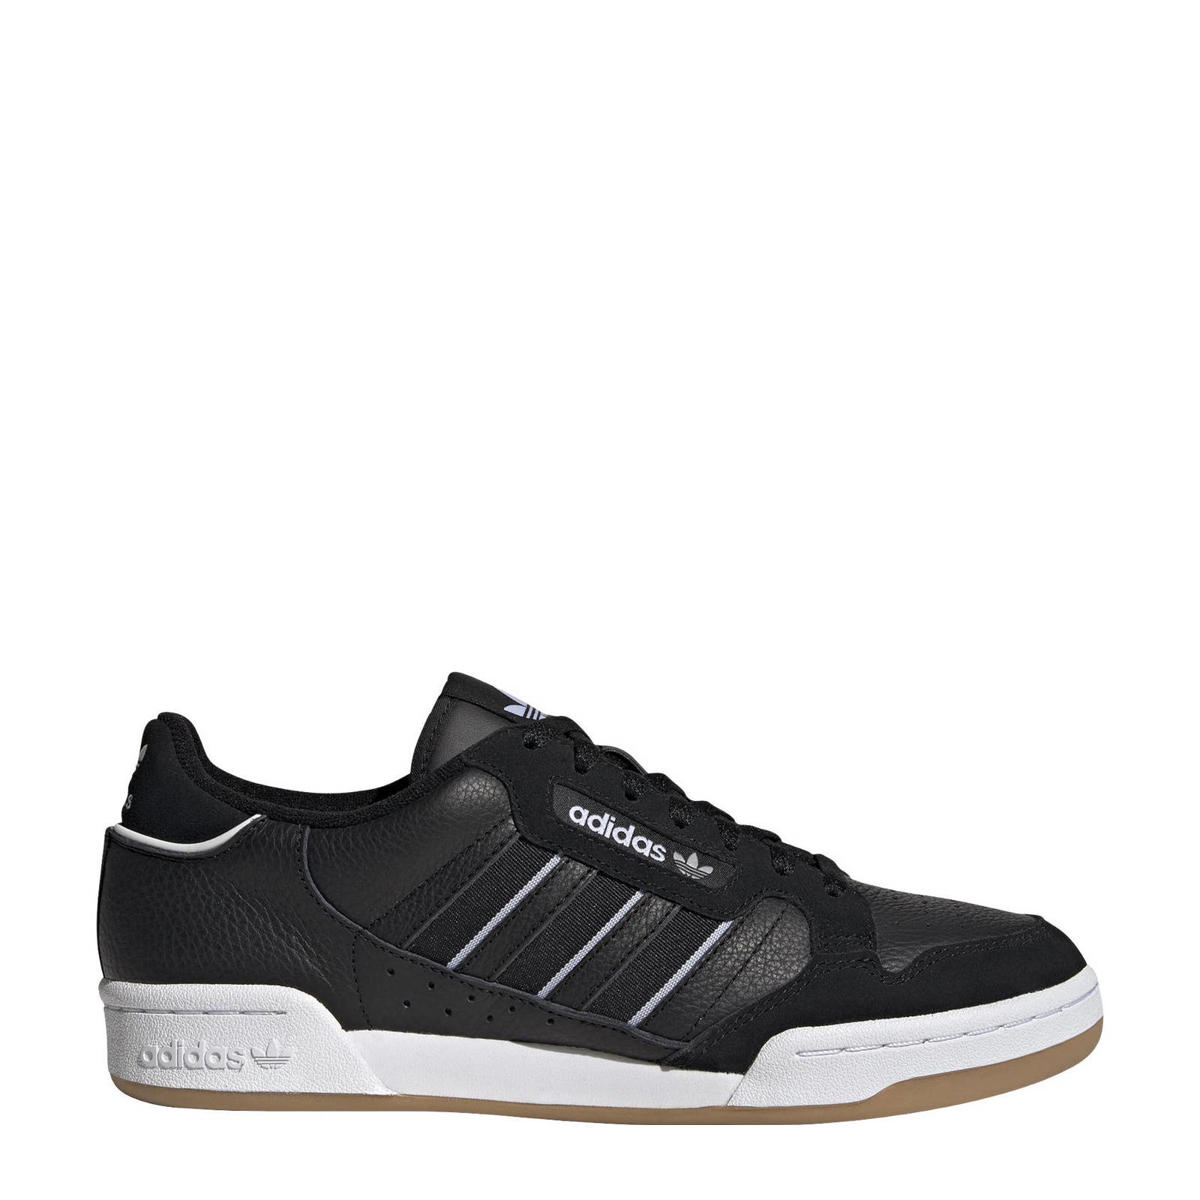 Museum Altaar Perfect adidas Originals Continental 80 Stripes sneakers zwart/wit | wehkamp